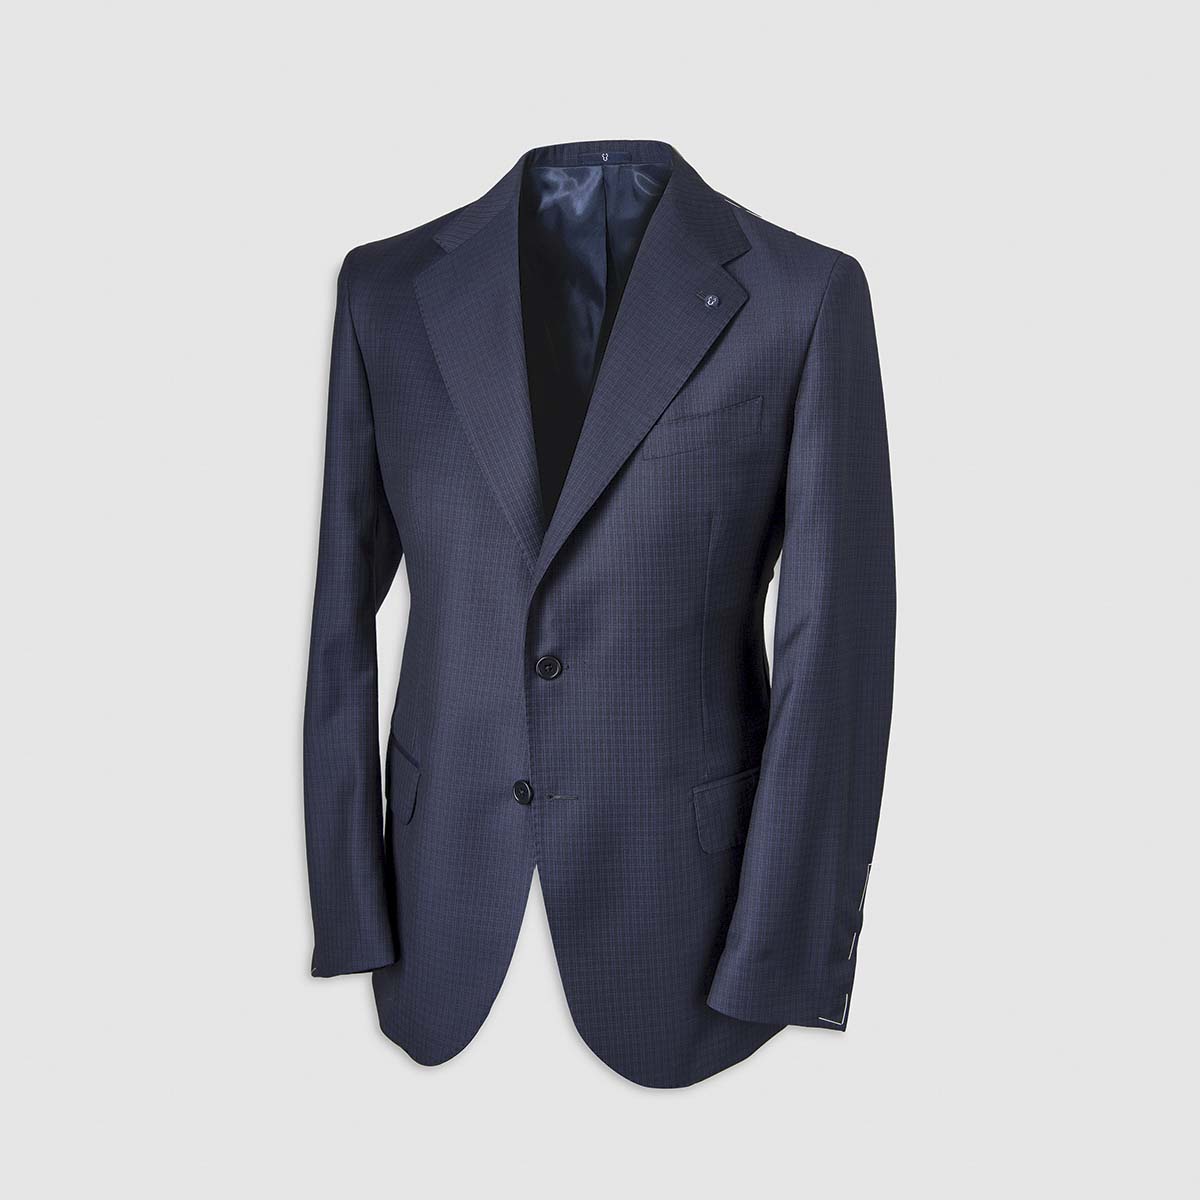 Blue Gingham Pattern Smart Suit in 130s Four Season Wool Melillo 1970 on sale 2022 2